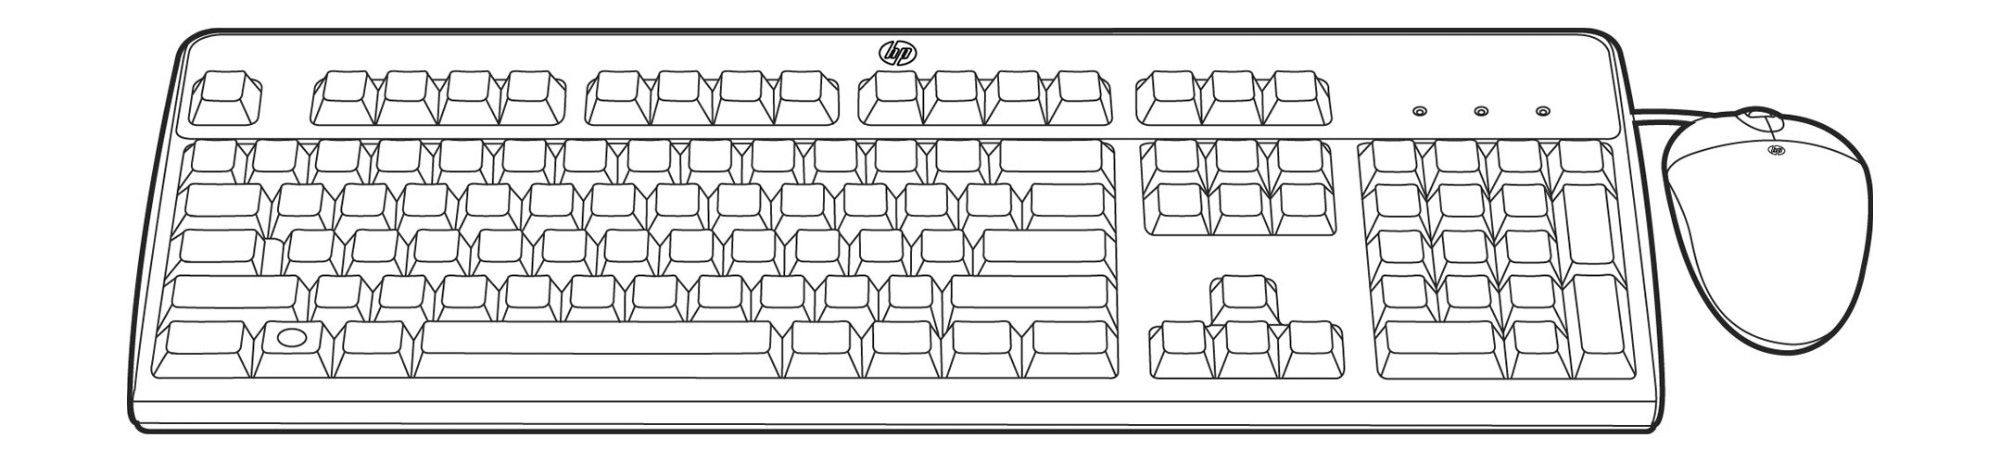 Hewlett Packard Enterprise 631344-B21 keyboard Mouse included USB QWERTY English Black